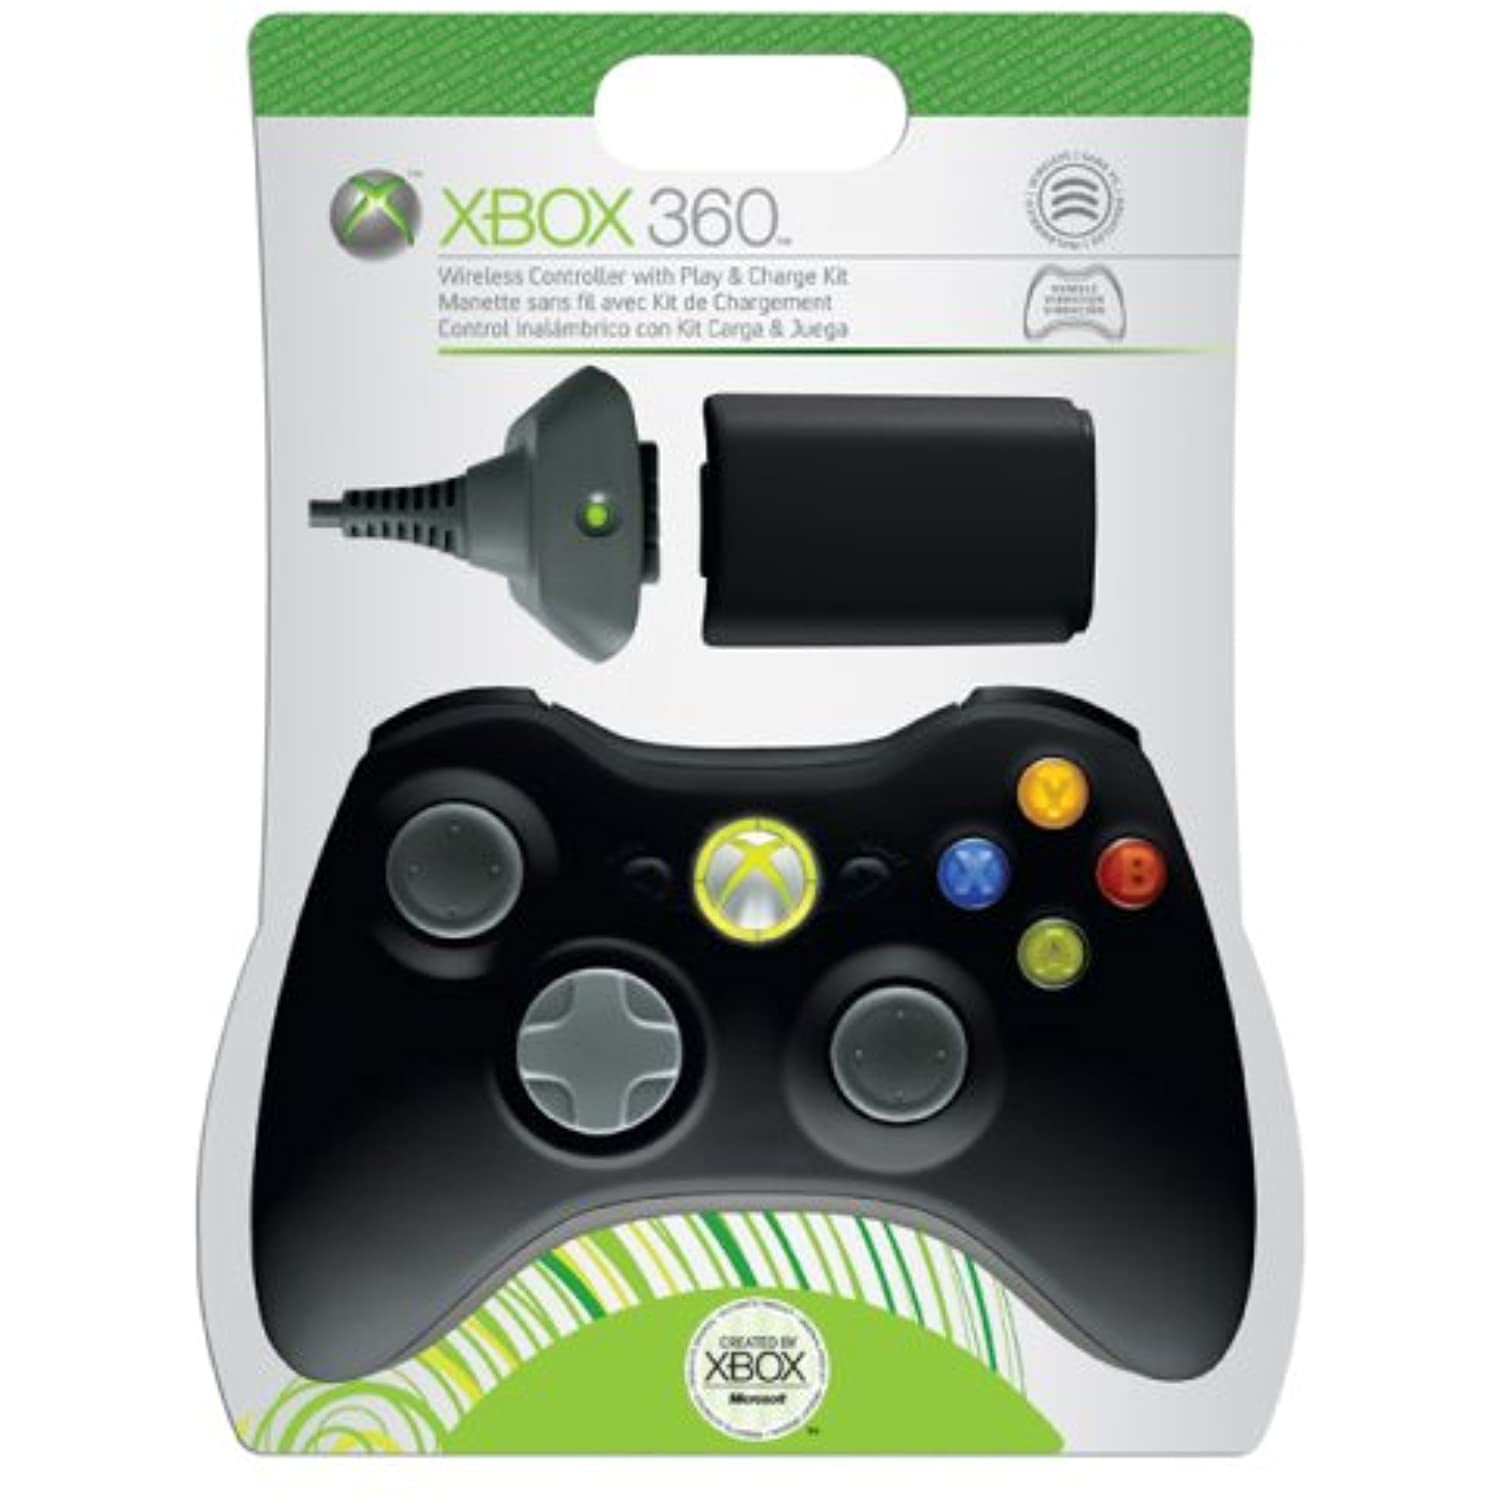 Xbox 360 play. Xbox 360 Wireless Controller Charger. Charge Kit Xbox 360. Геймпад барабан Xbox 360. Беспроводной контроллер Xbox 360 через Play.